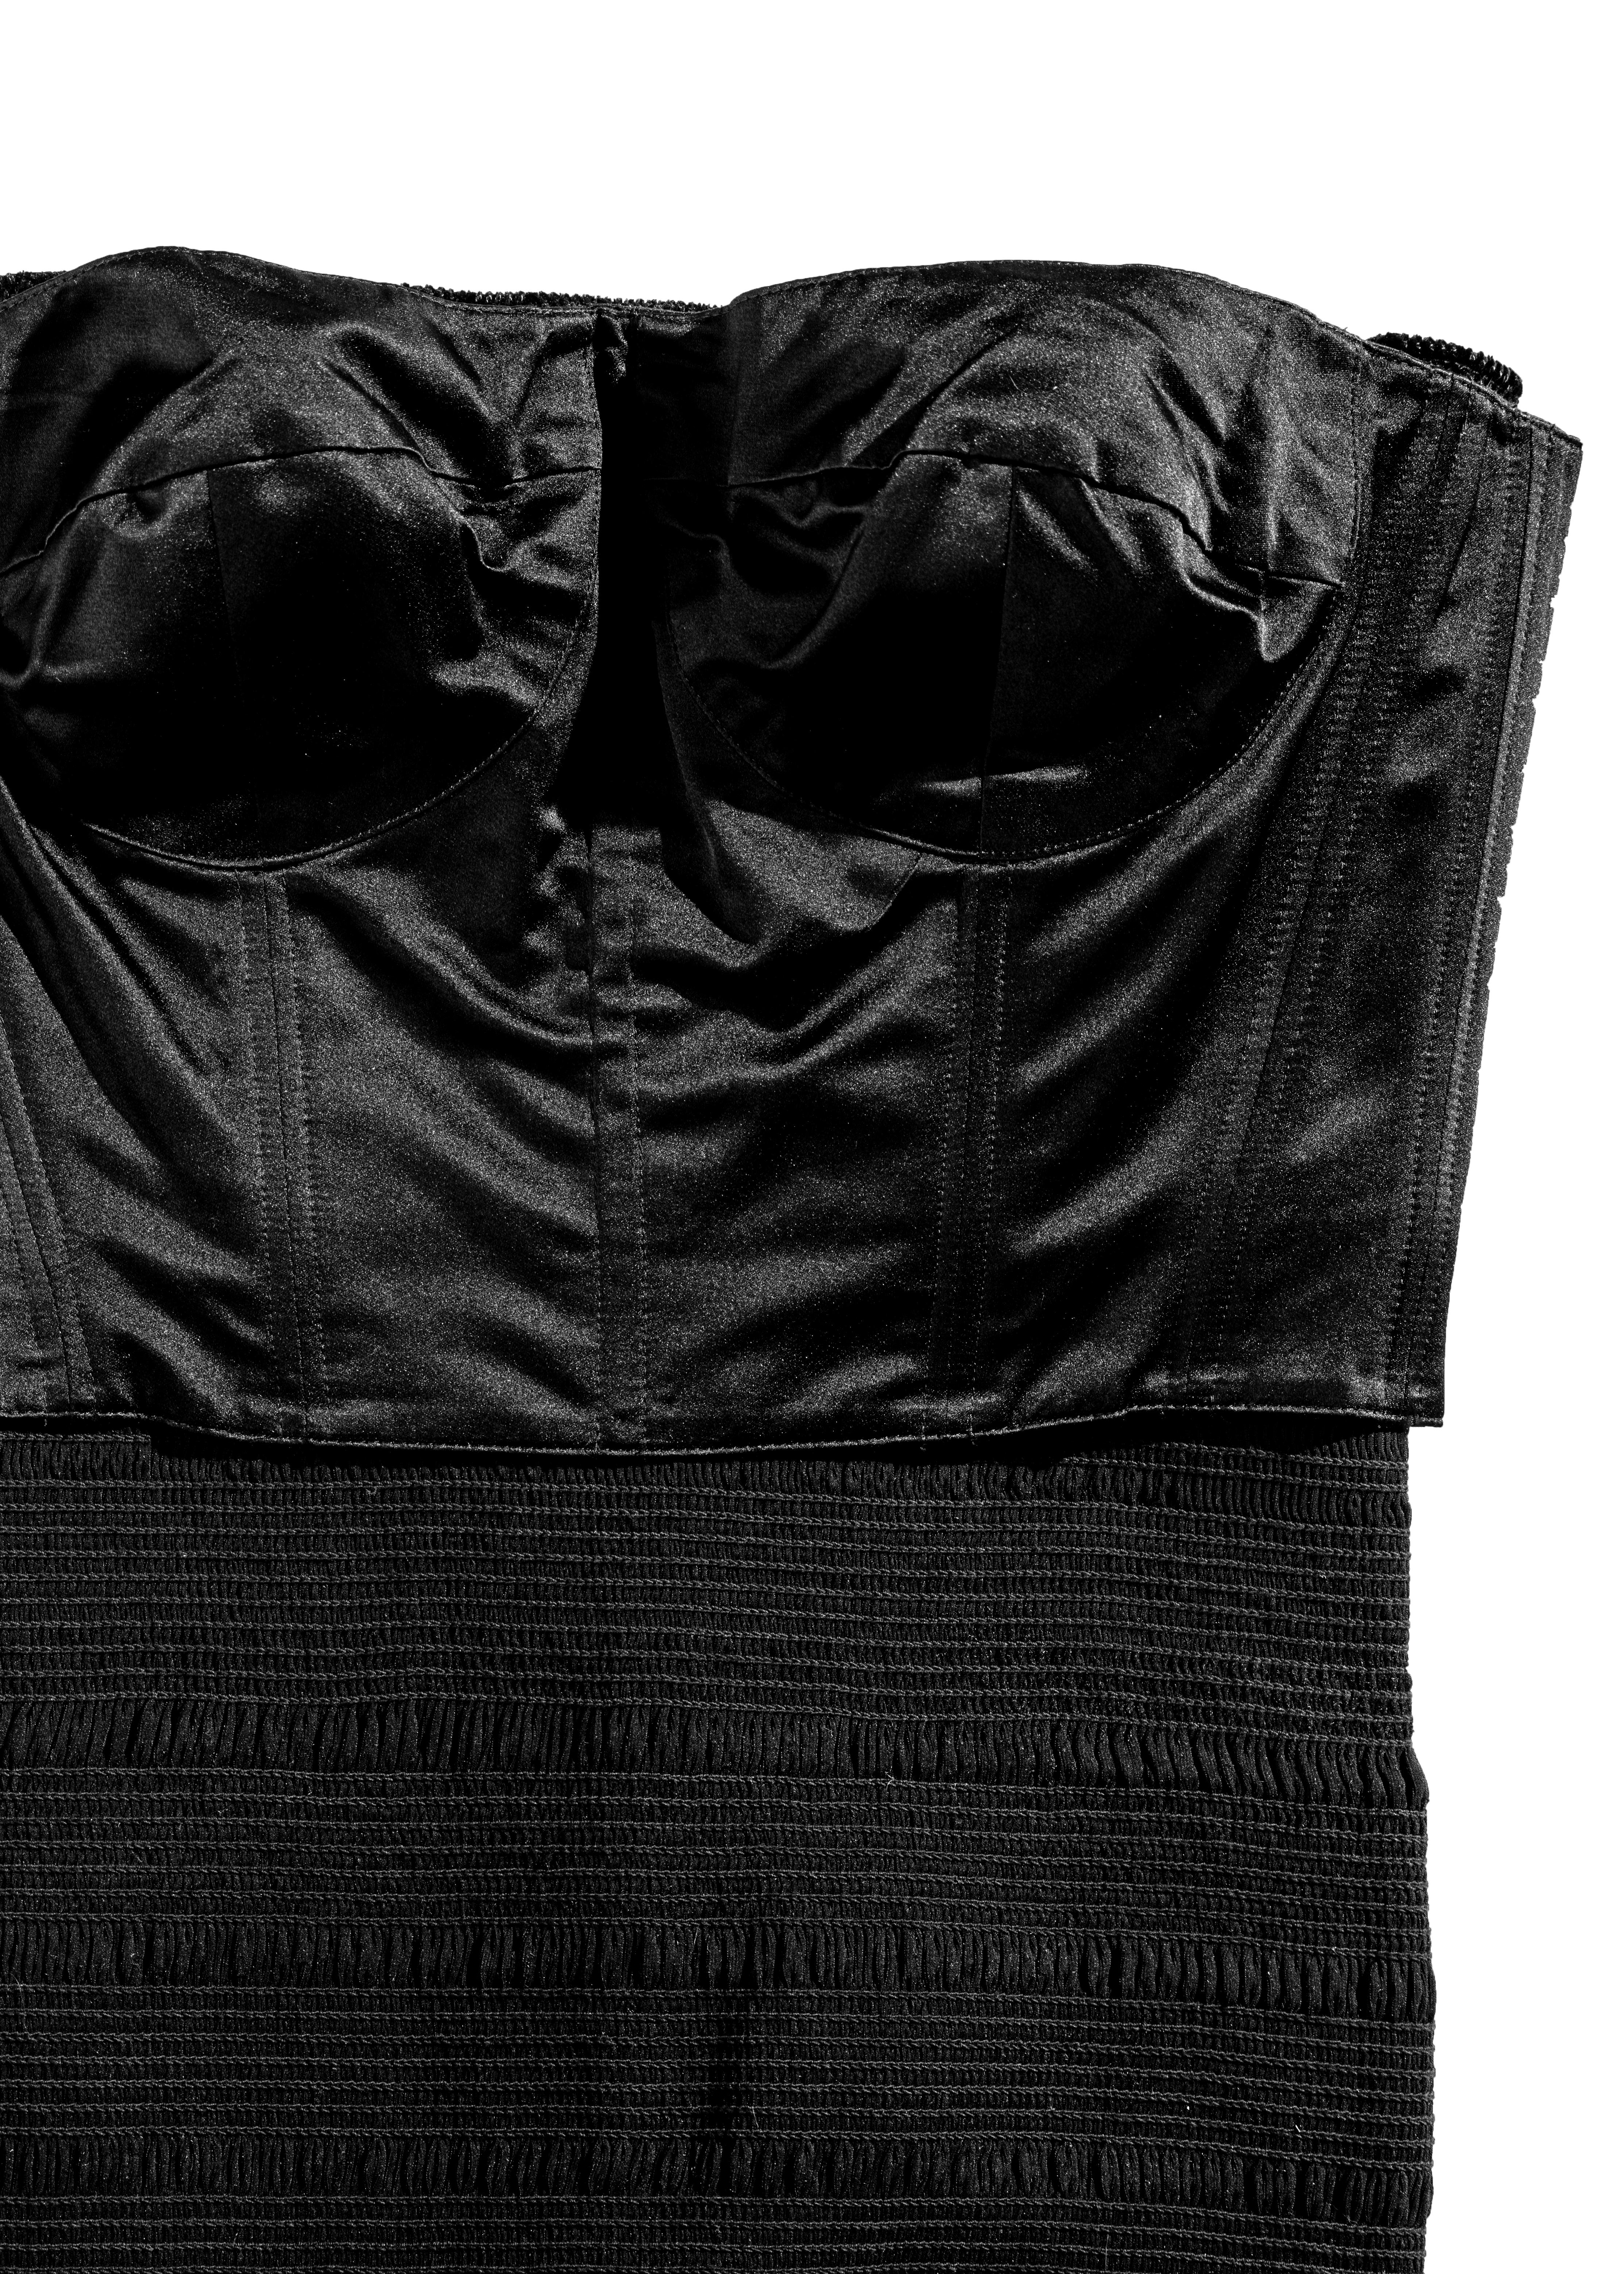 John Galliano black chenille opera coat and strapless corset dress, fw 1995 5